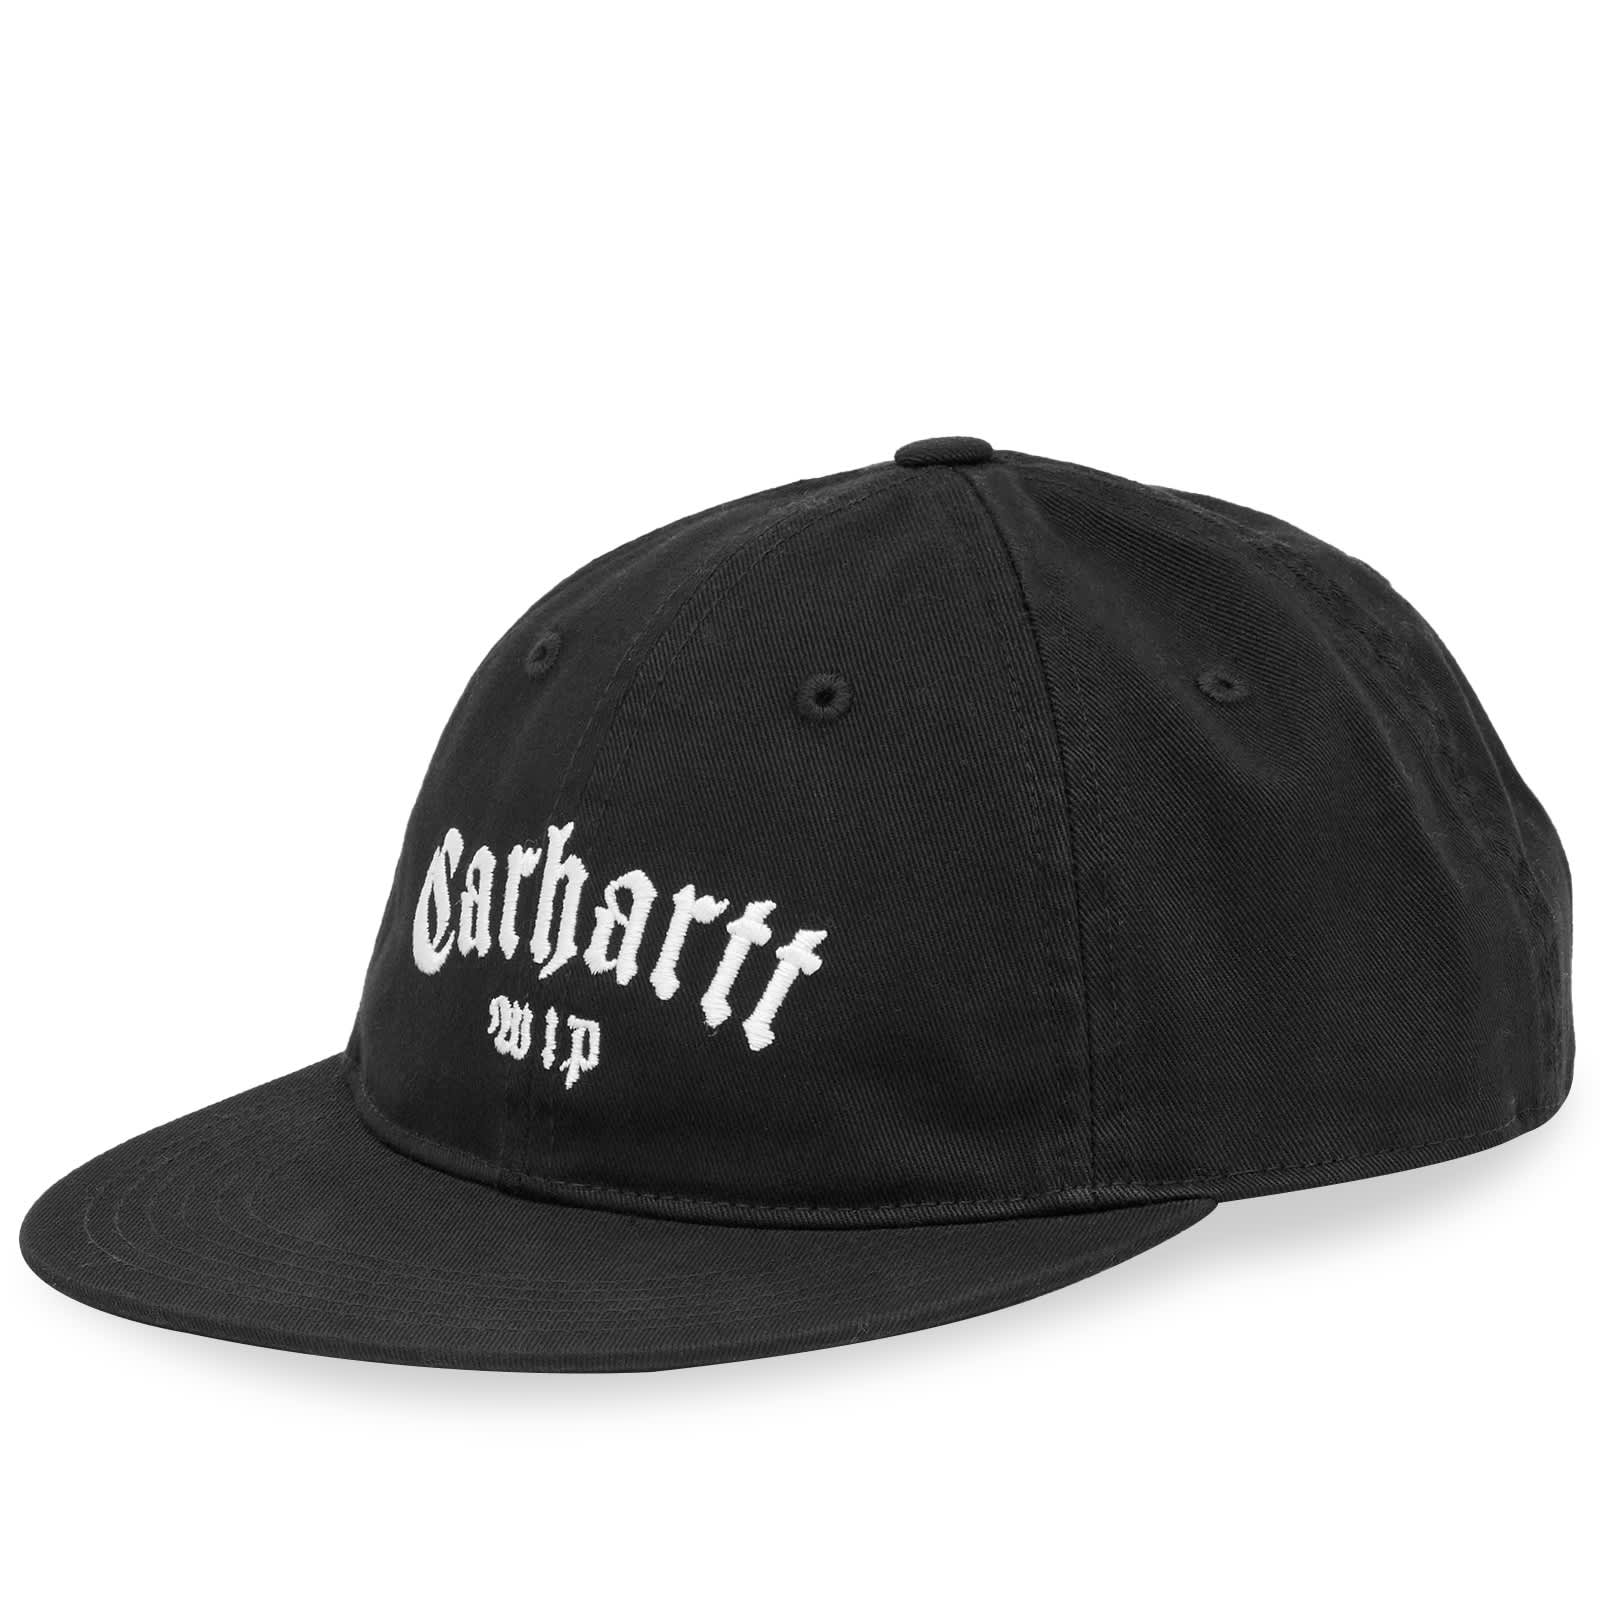 Бейсболка Carhartt Wip Onyx, цвет Black & White кардиган carhartt wip onyx knit цвет black